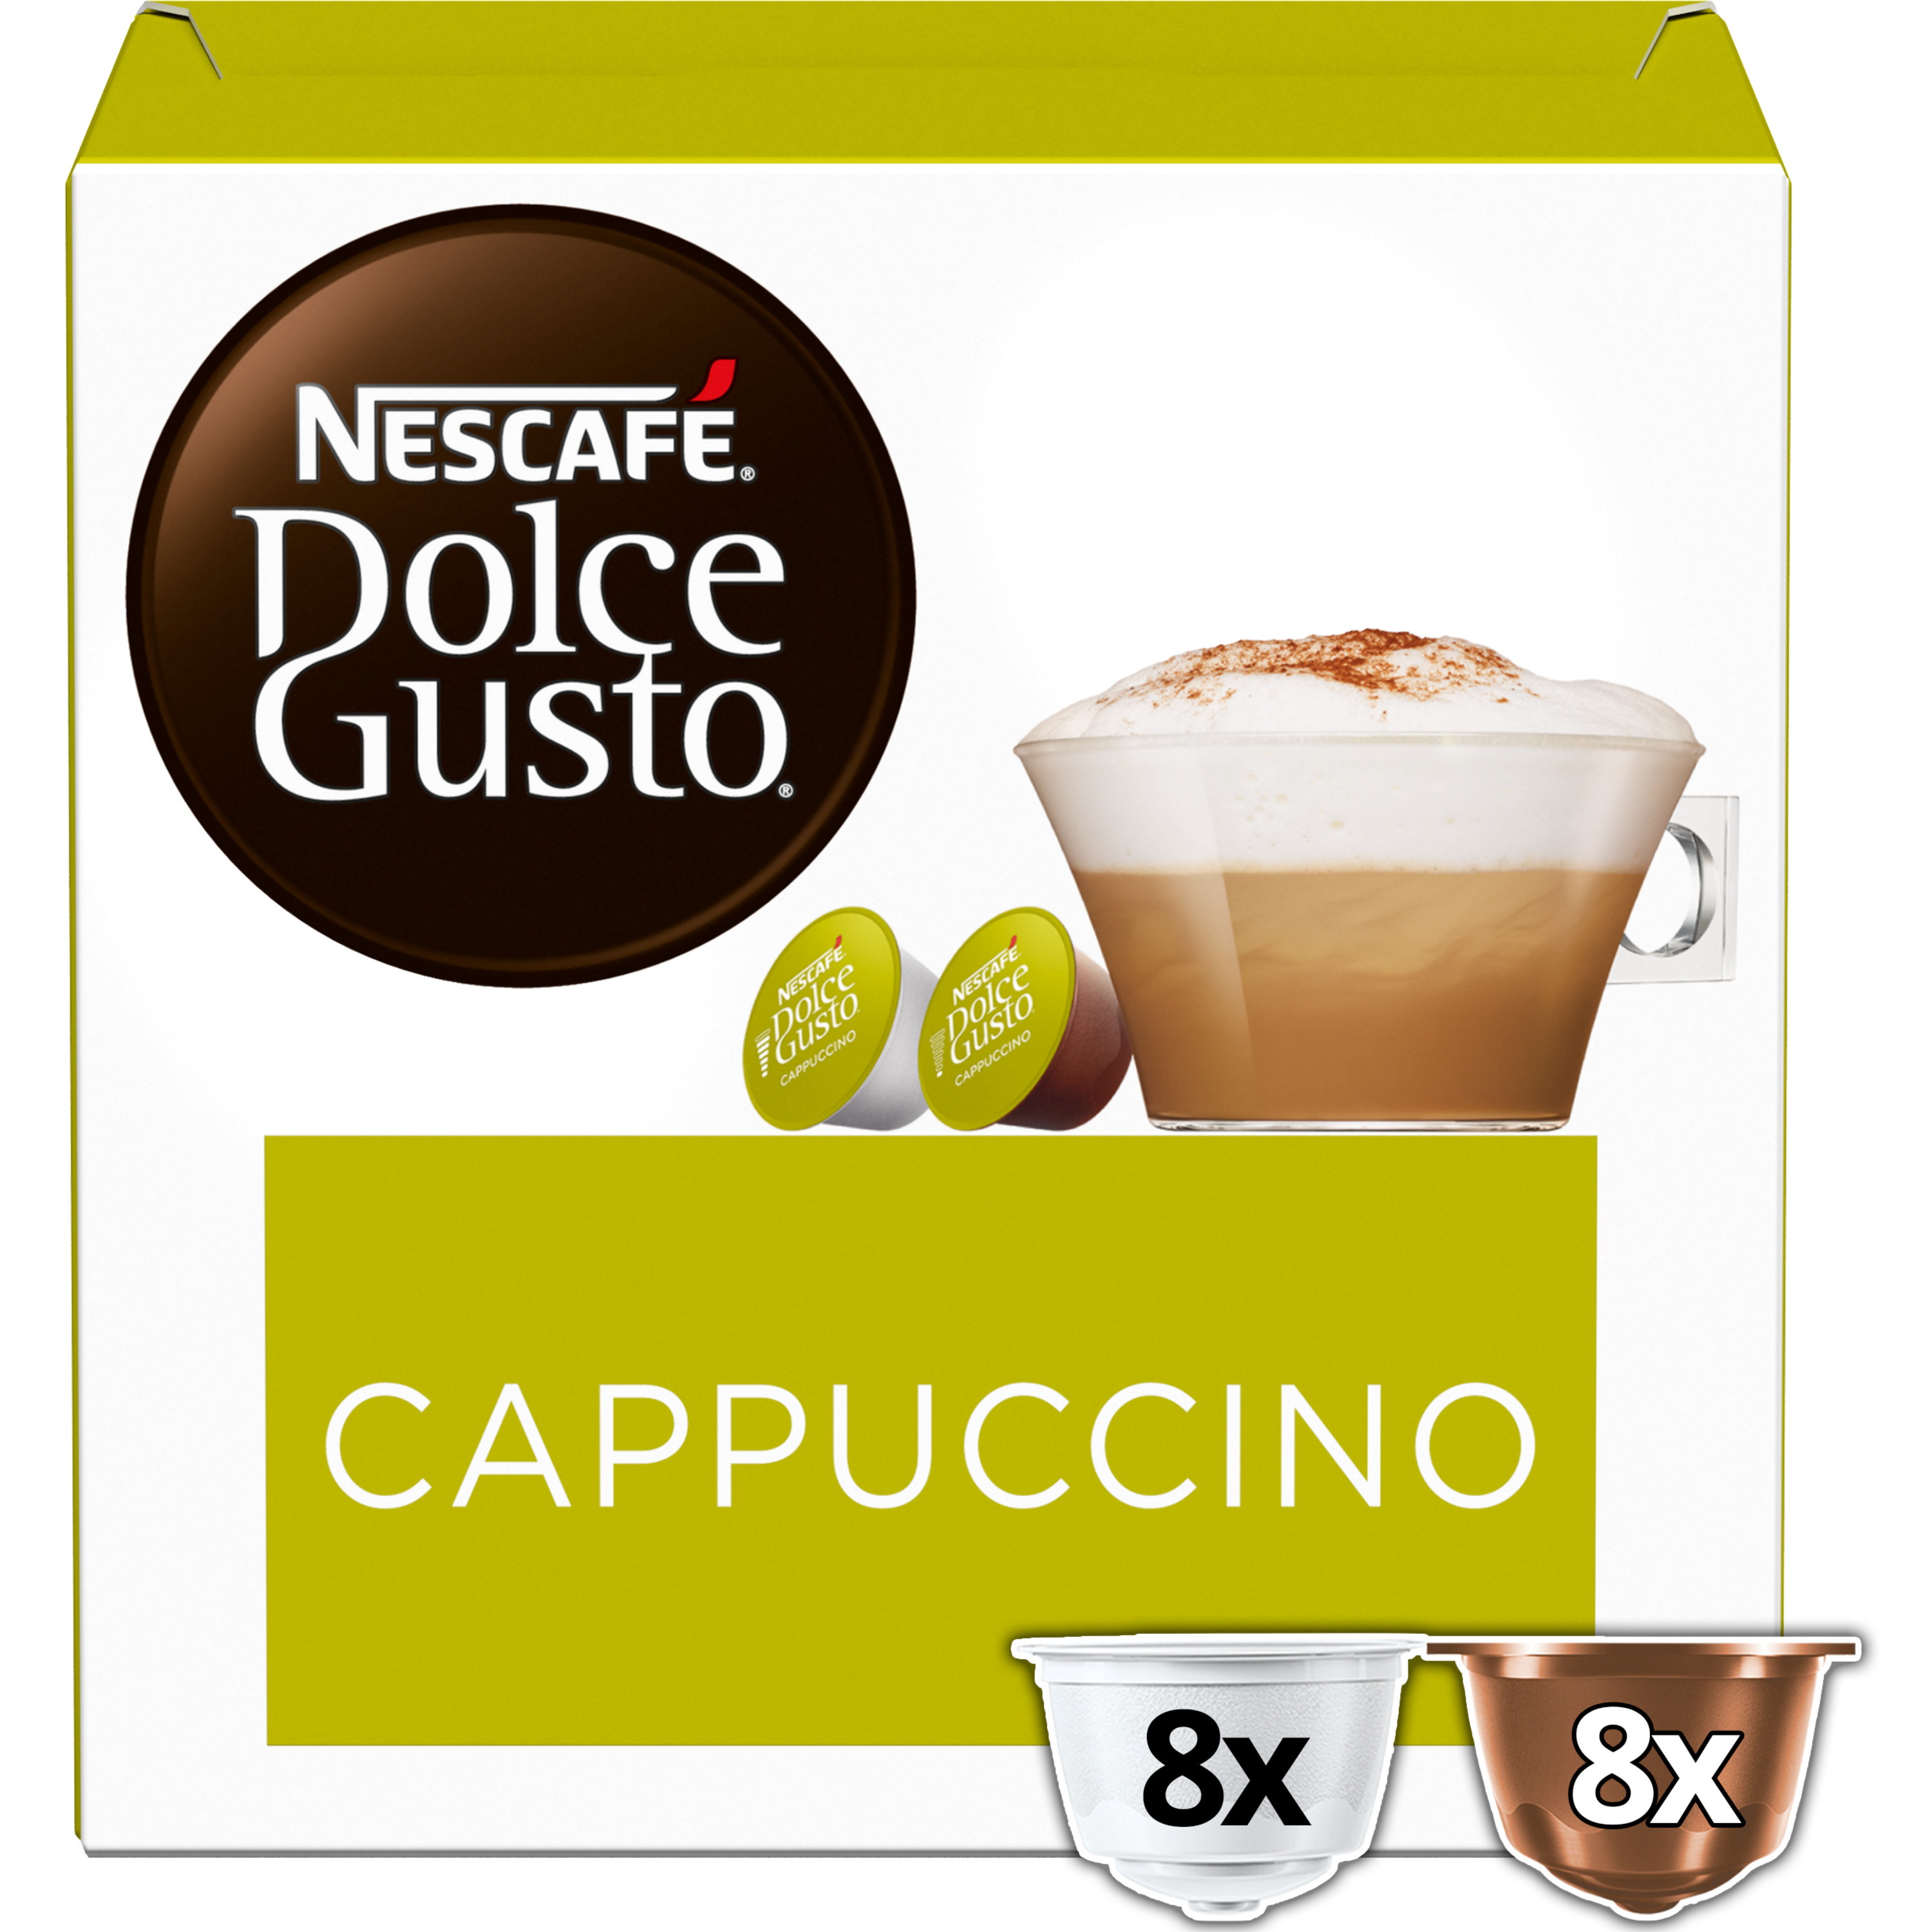 Nescafe dolce cappuccino. Nescafe Dolce gusto Cappuccino. Нескафе Дольче густо капсулы капучино. Кофе в капсулах Nescafe Dolce gusto Cappuccino 16 капсул. Капсулы Дольче густо капучино.